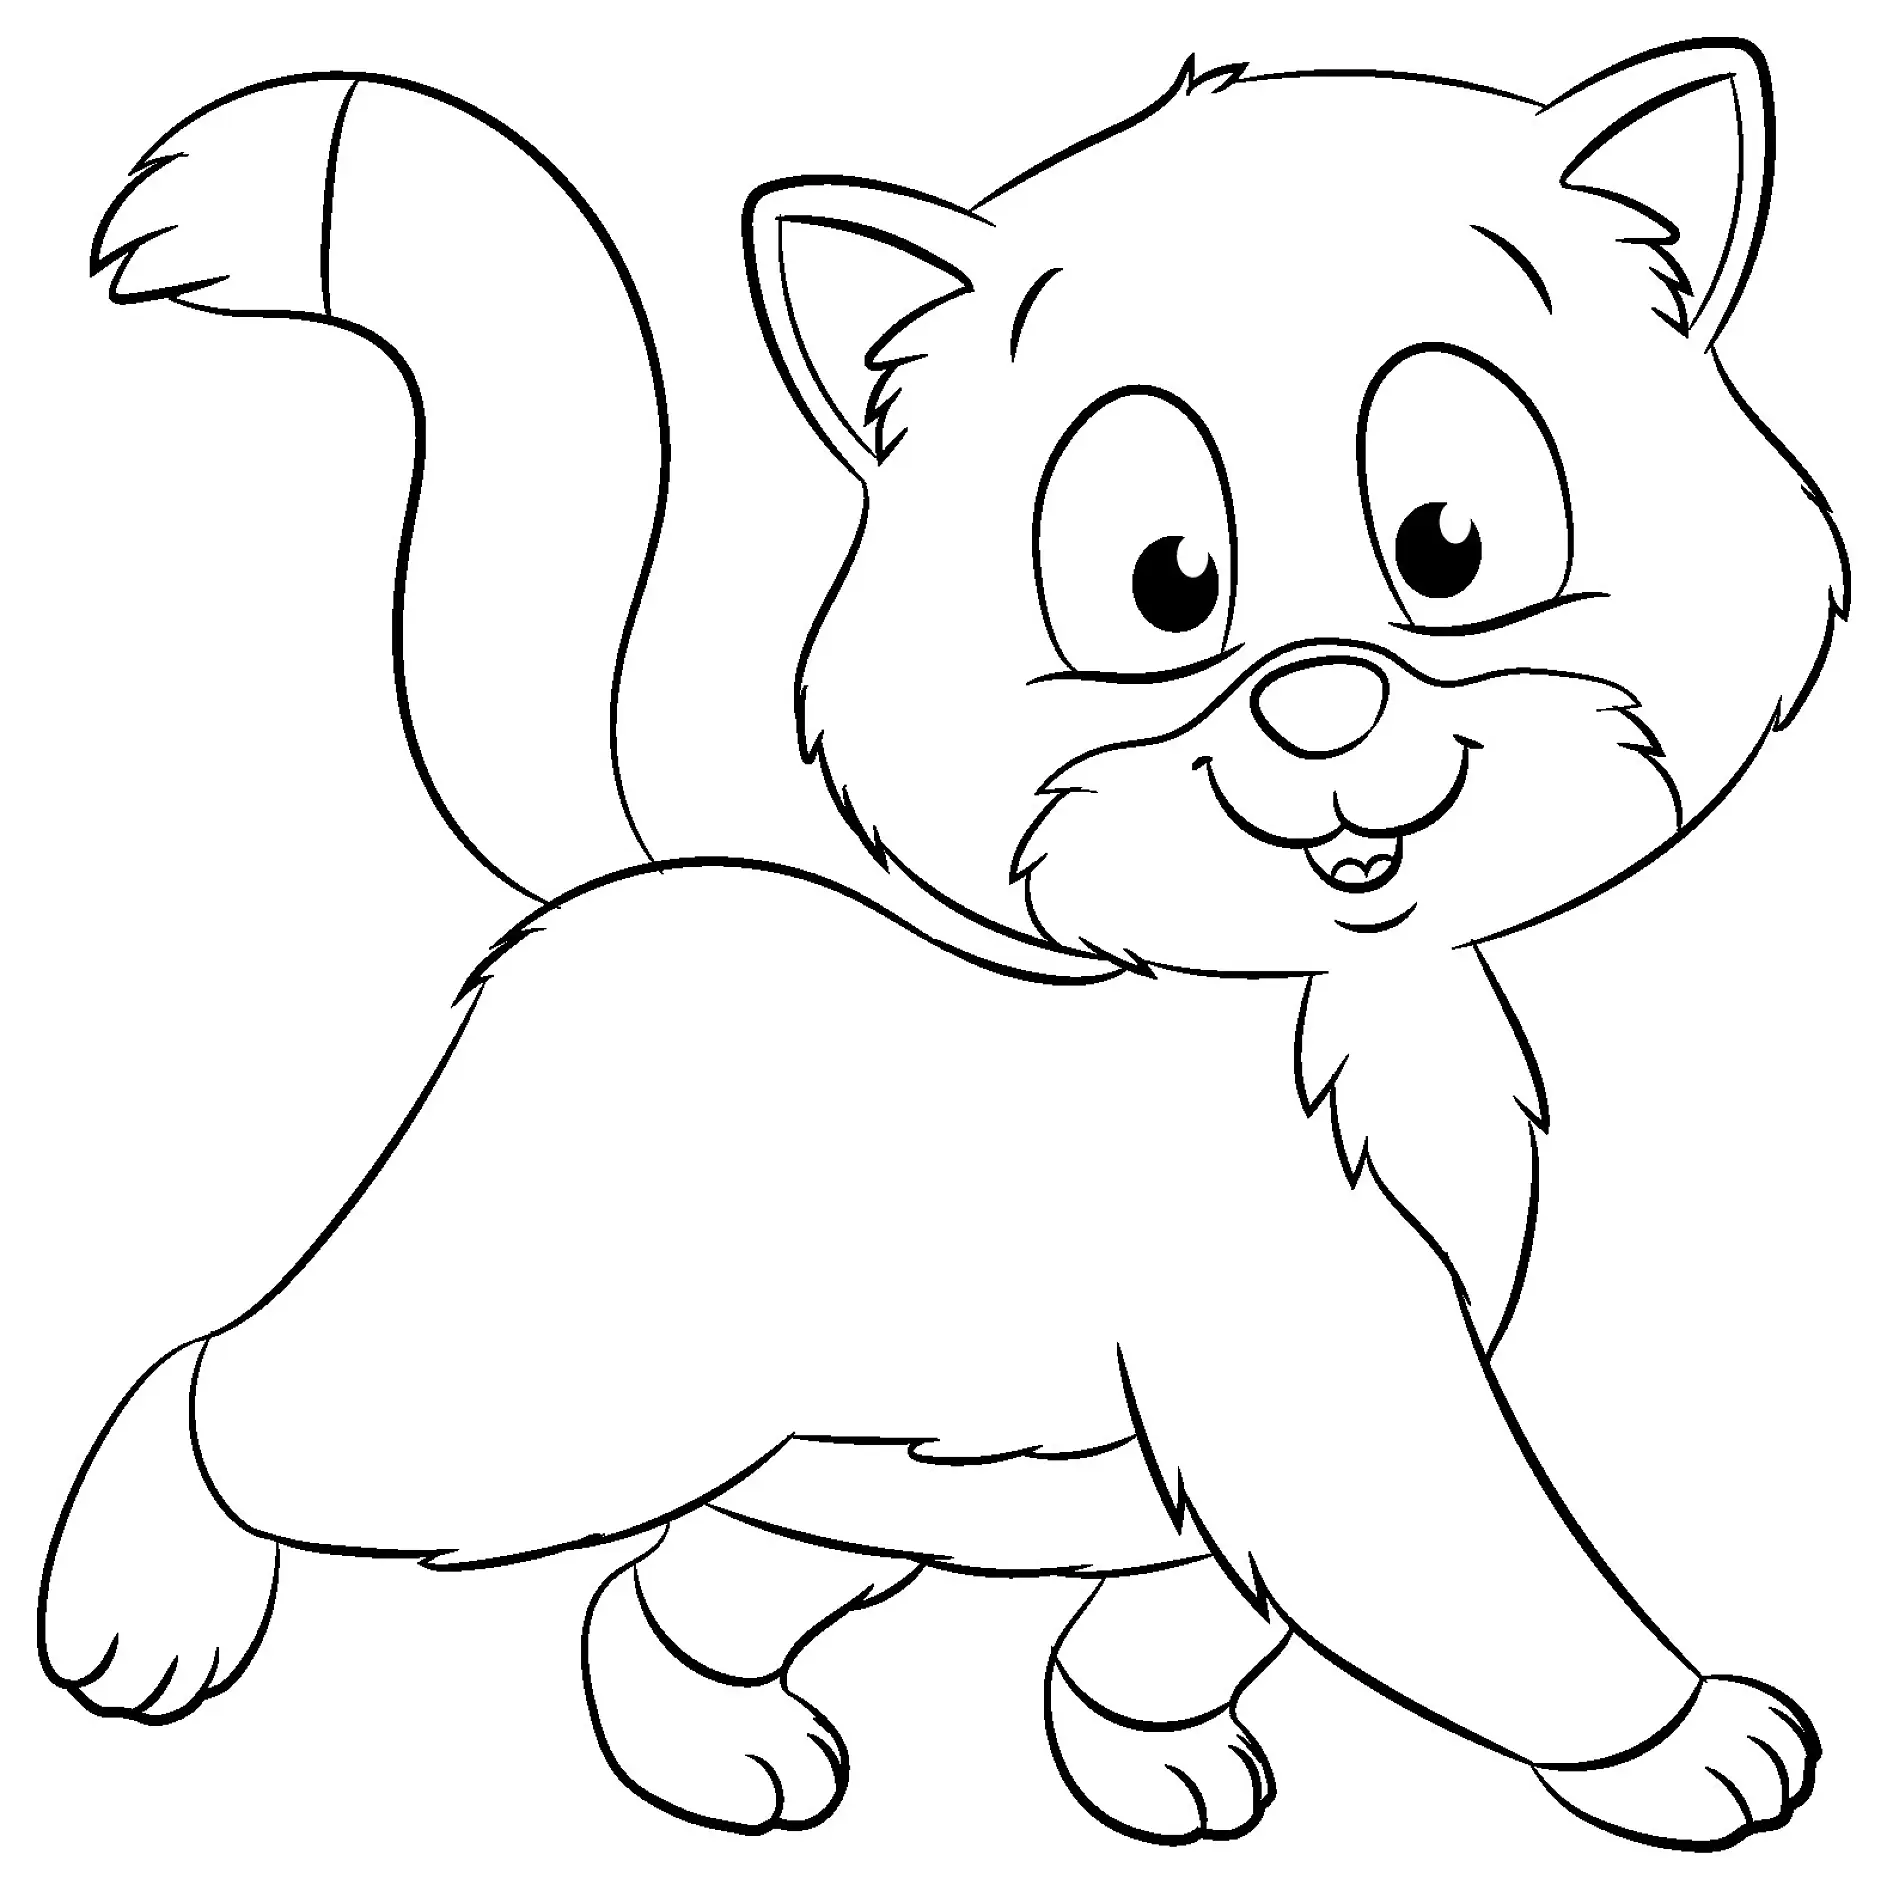 Ausmalbild Katze stehend fröhlichNiedliche Katze - Vektor-Illustration